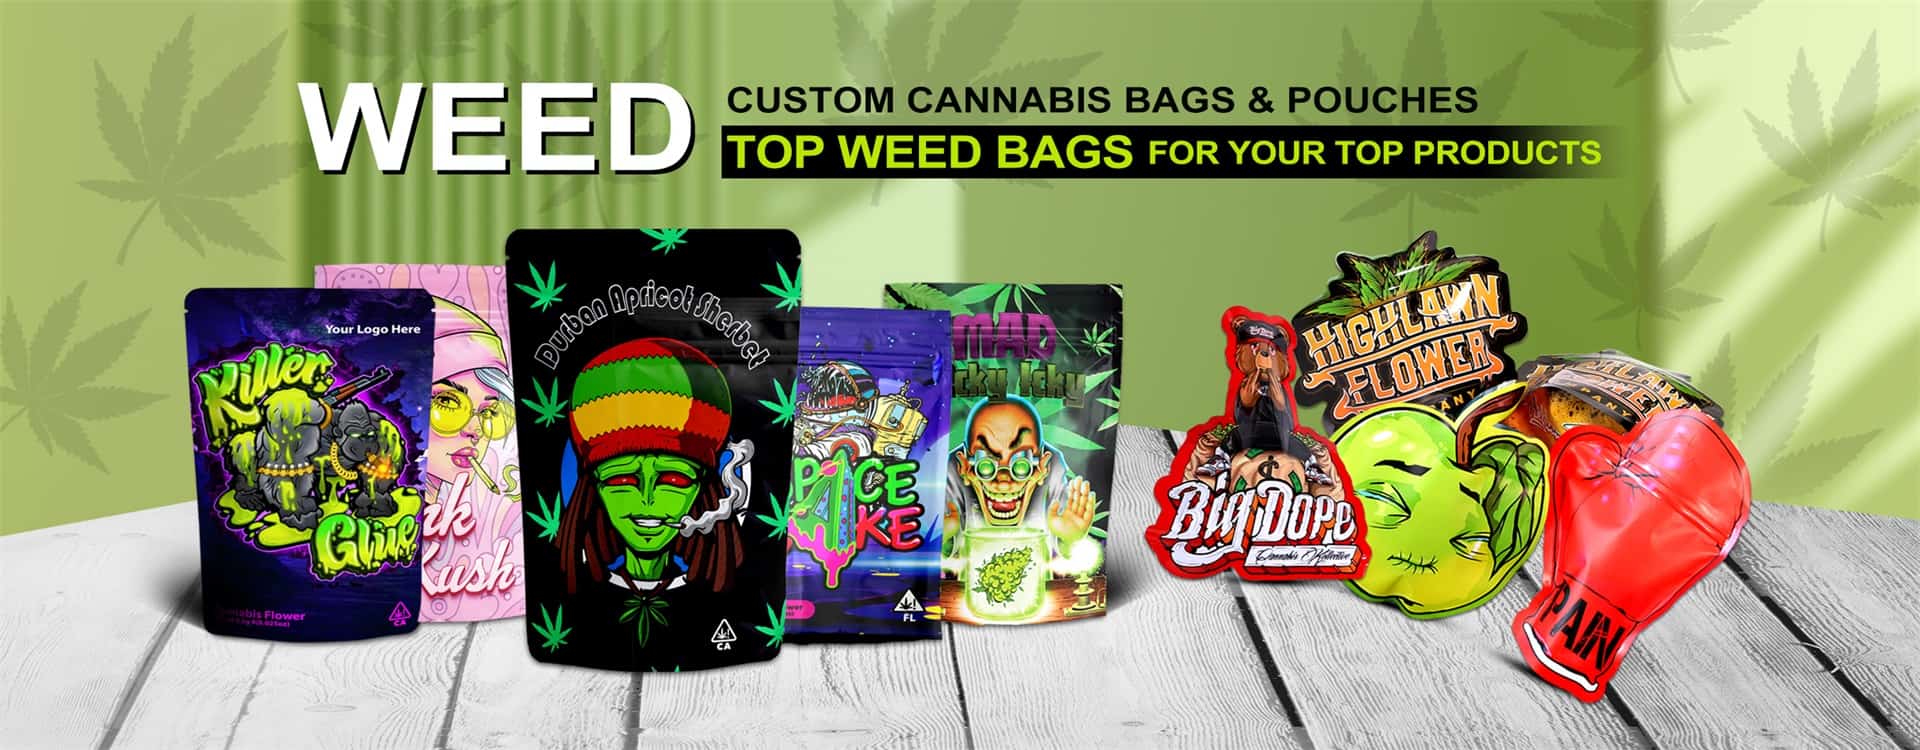 weed-bags-honest-custom-cannabis-pouches-marijuana-packaging